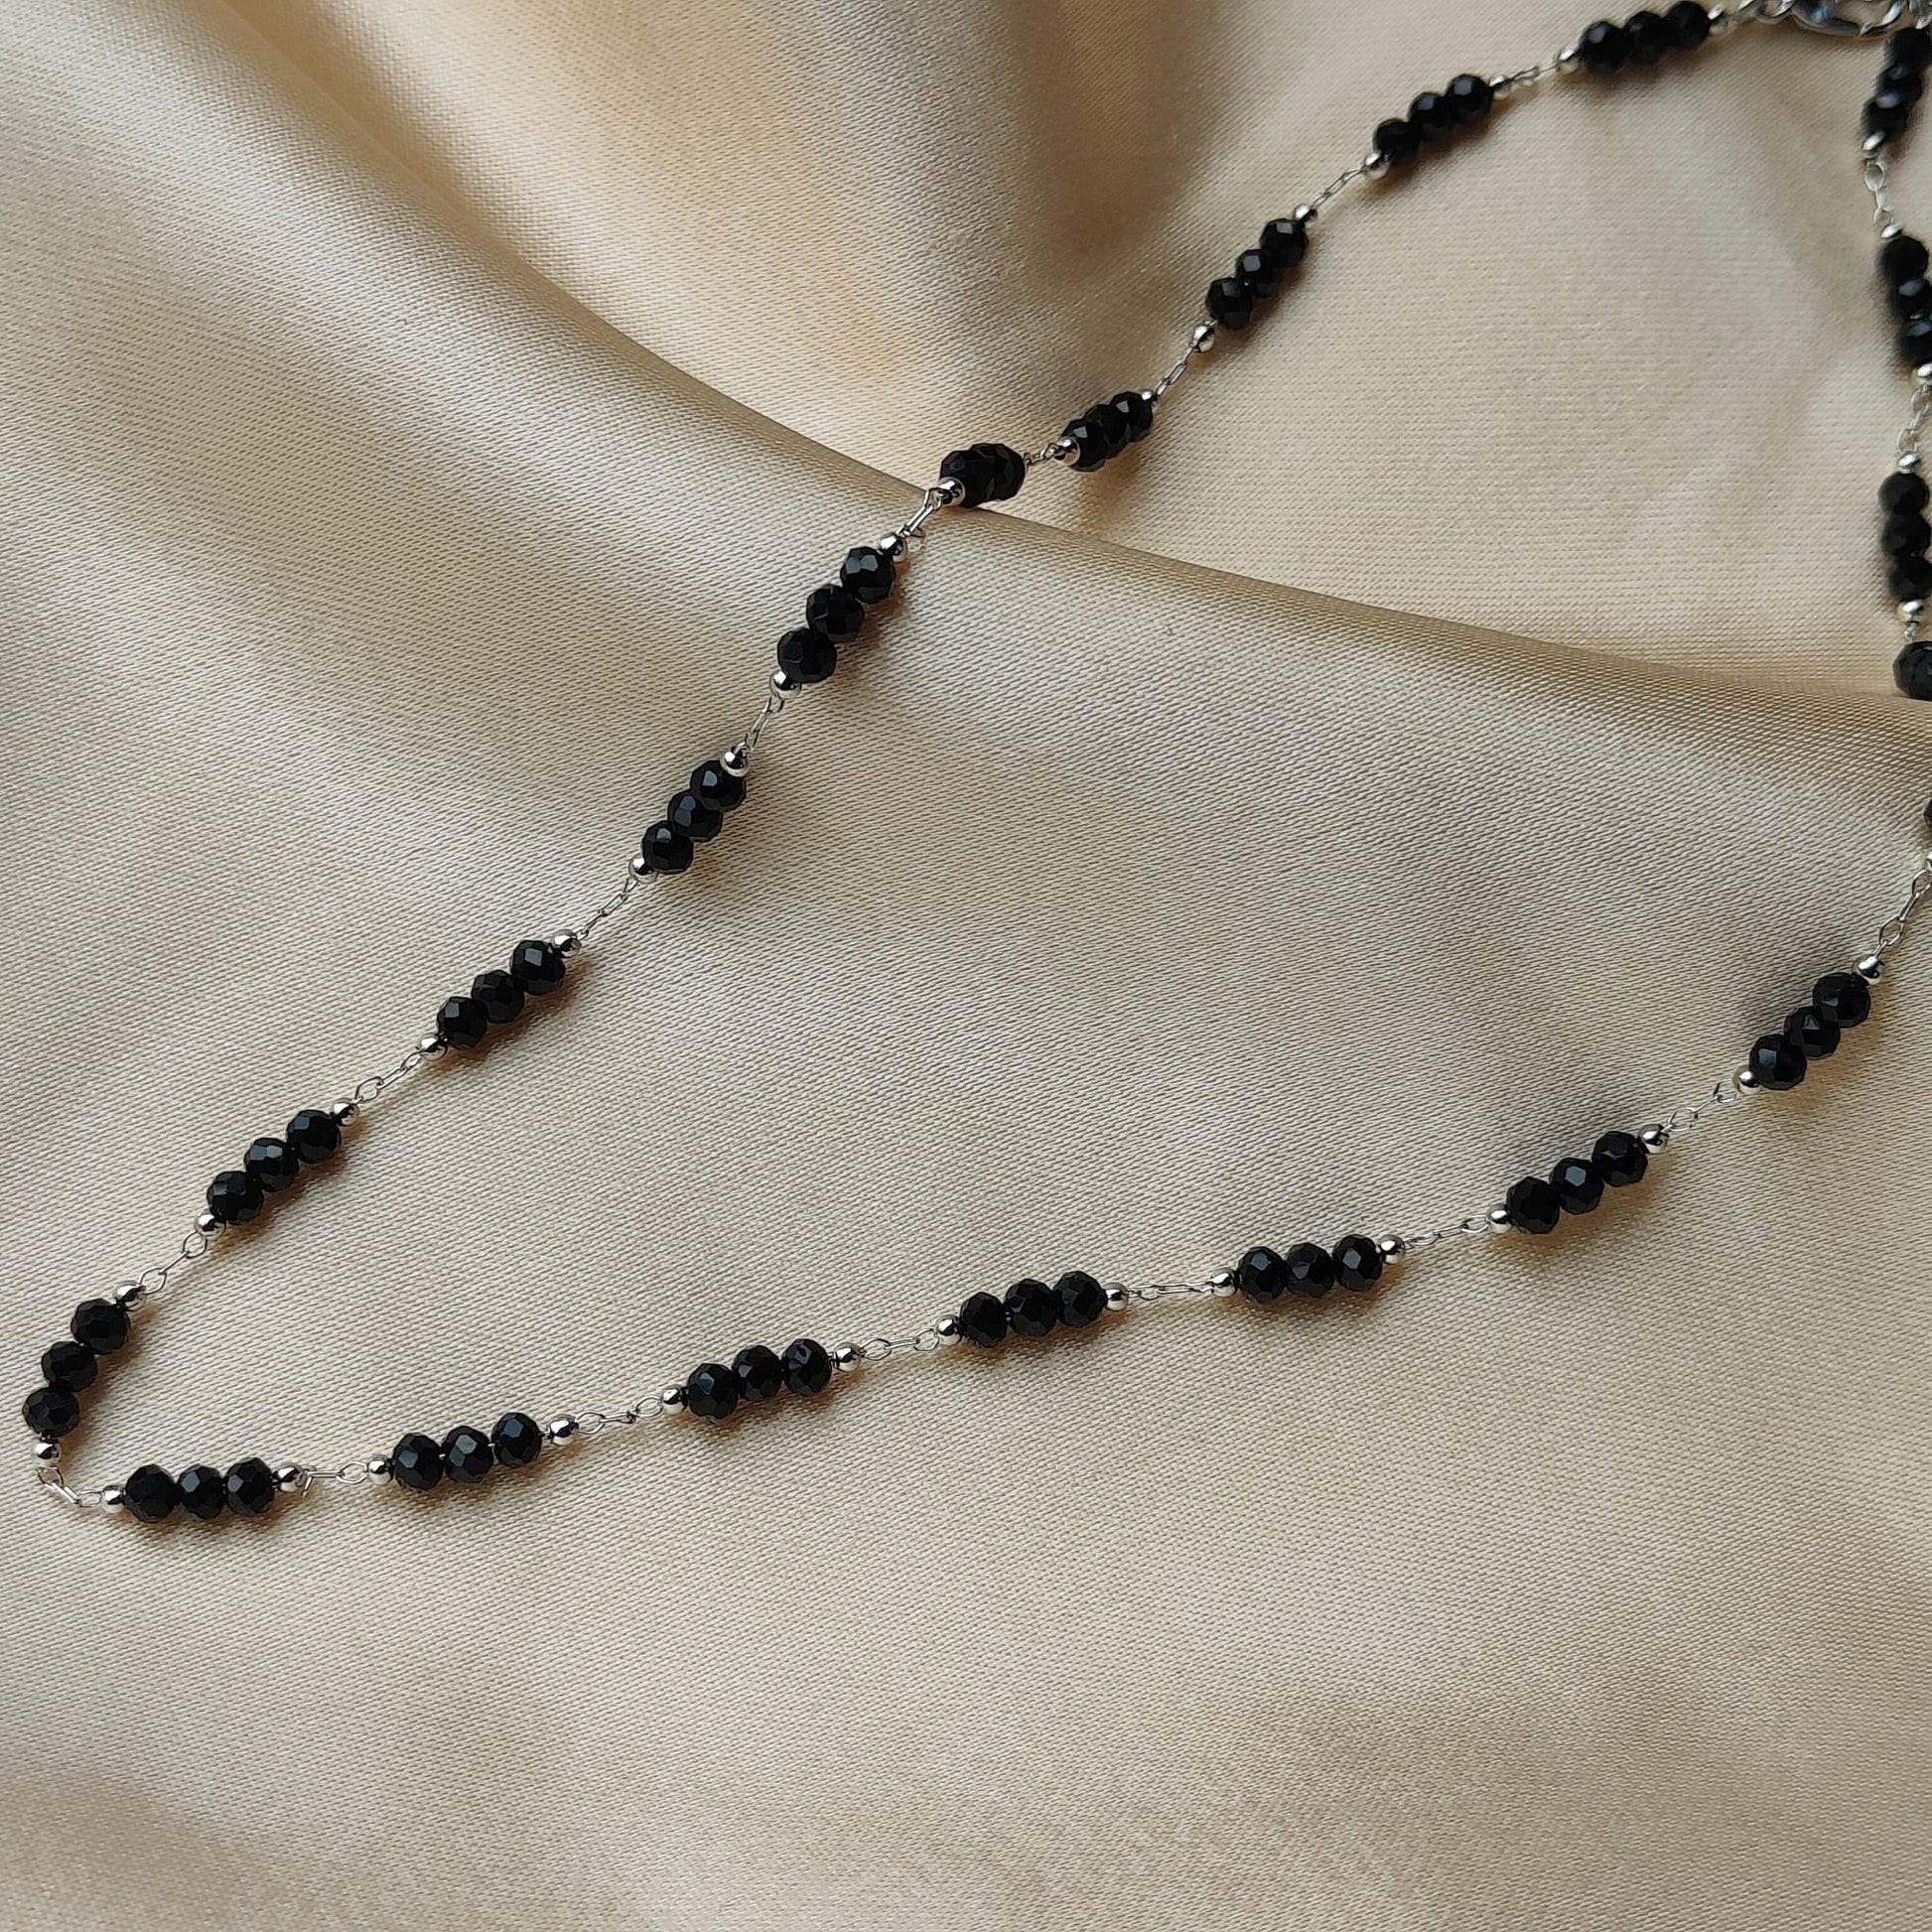 Handmade Black Crystal Beaded Indian Asian Nazar Mangalsutra Choker Necklace